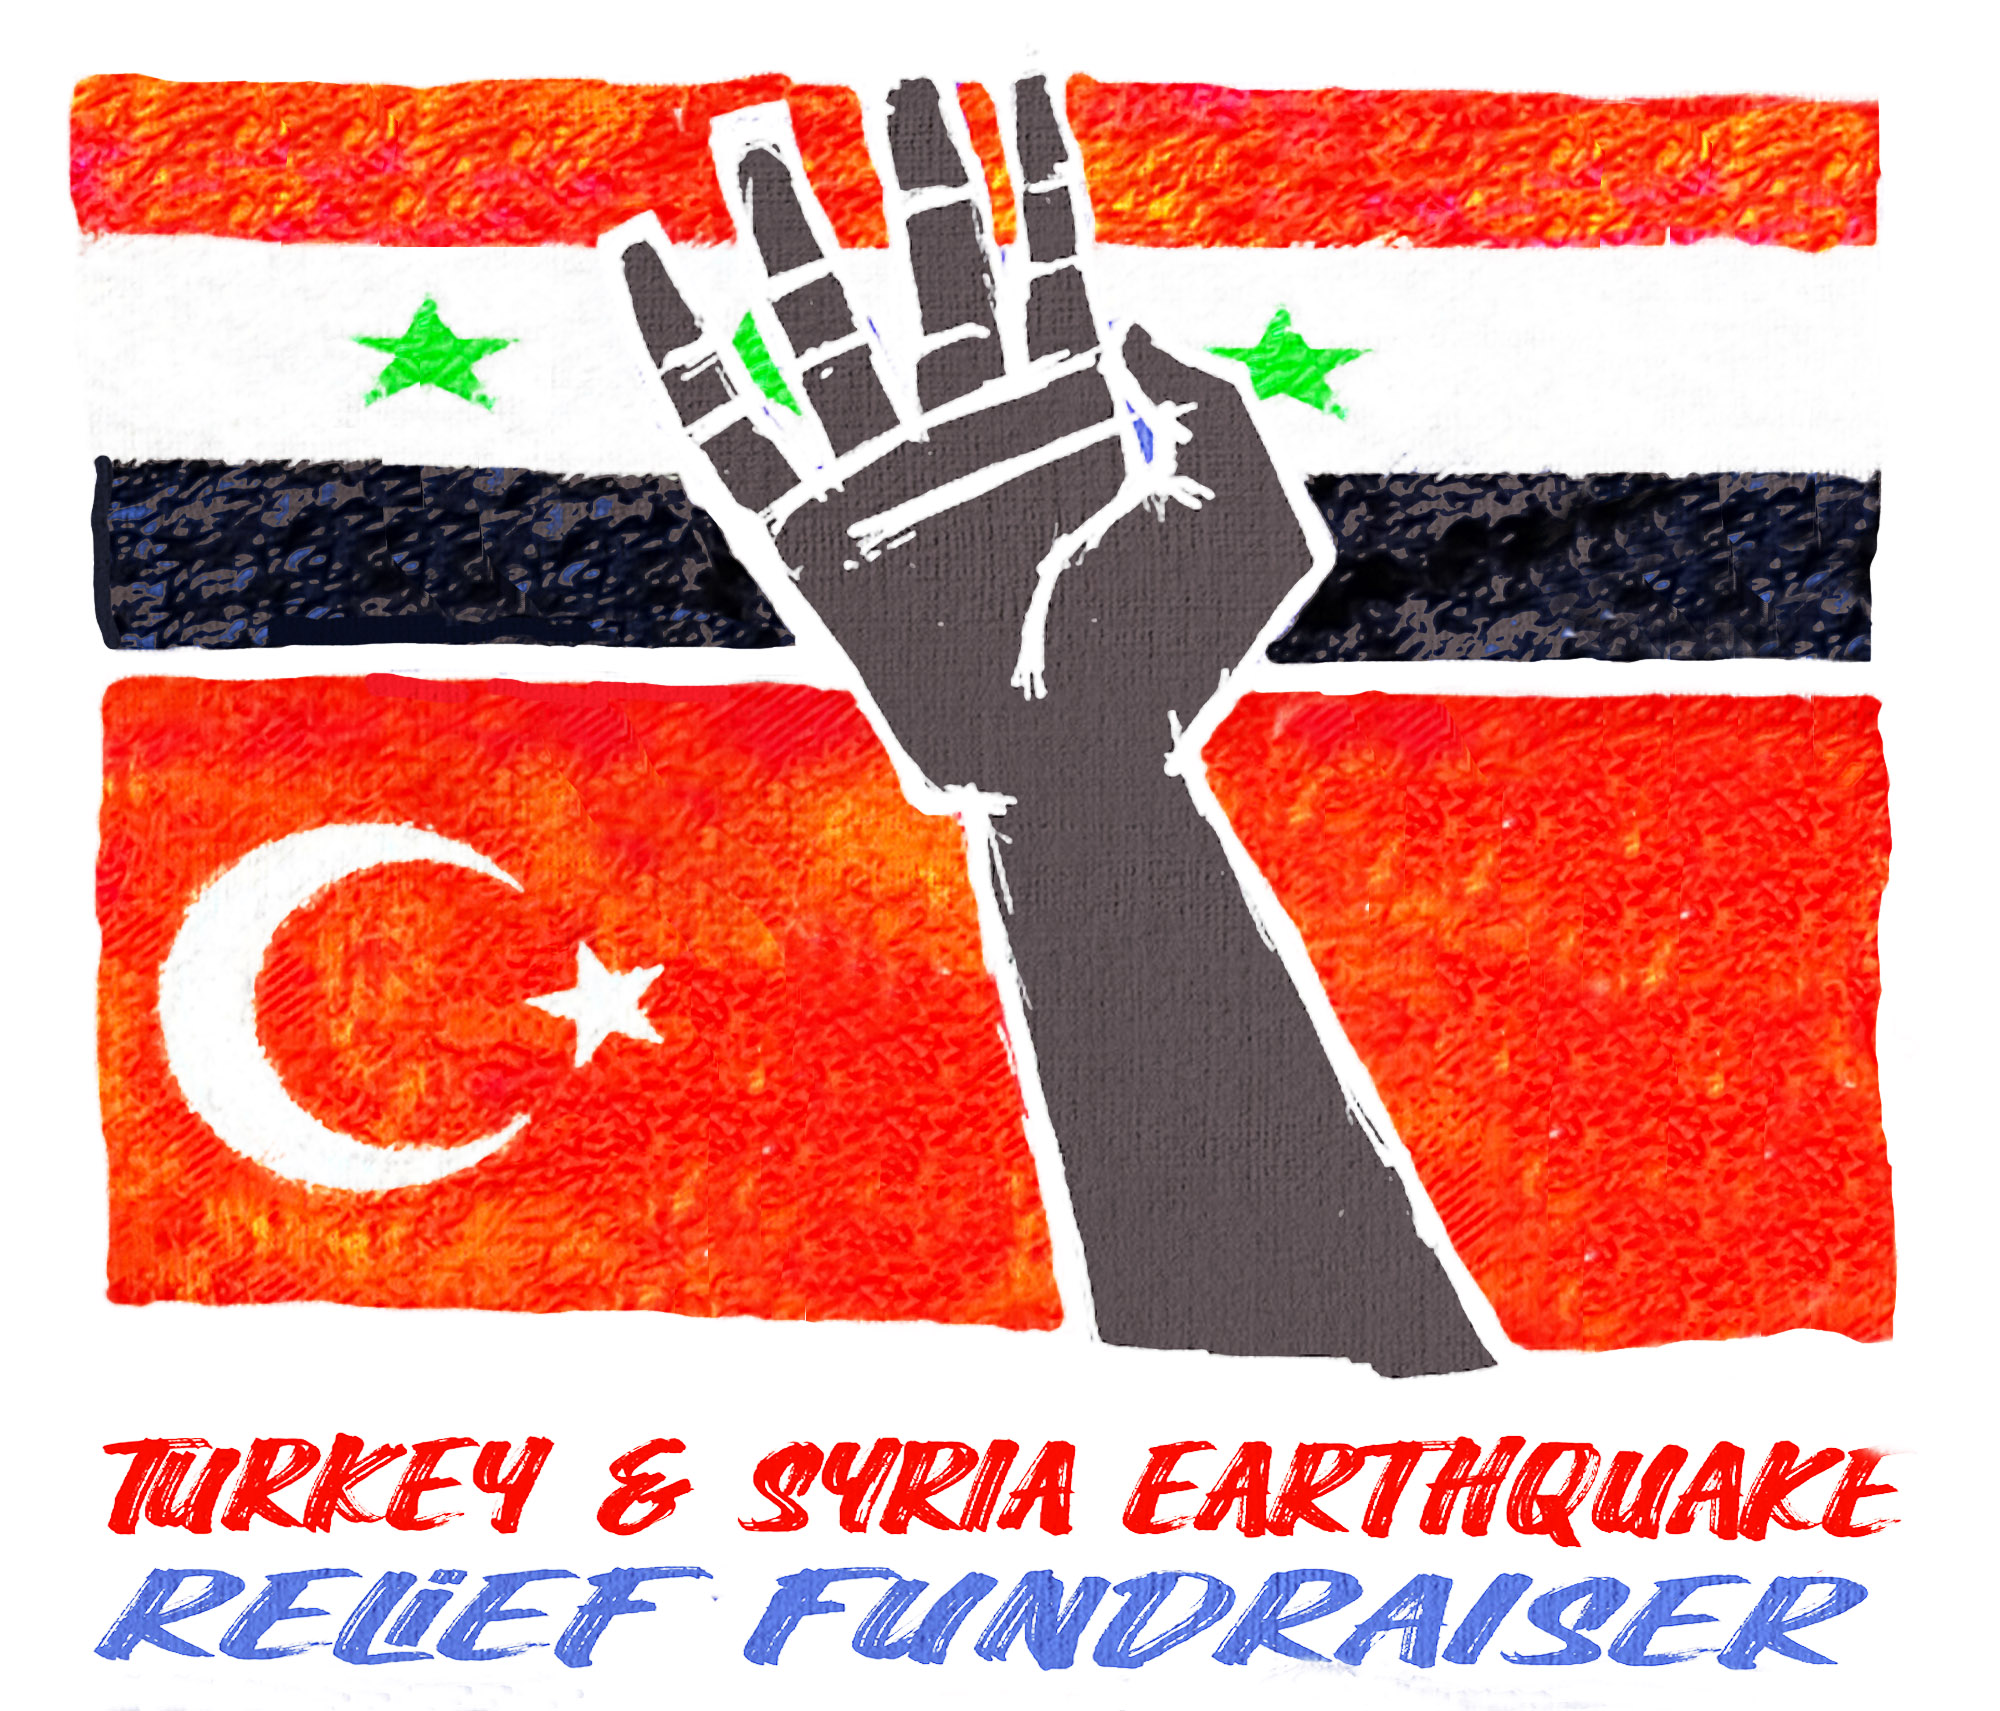 Fundraiser for Turkey & Syria Earthquake Relief